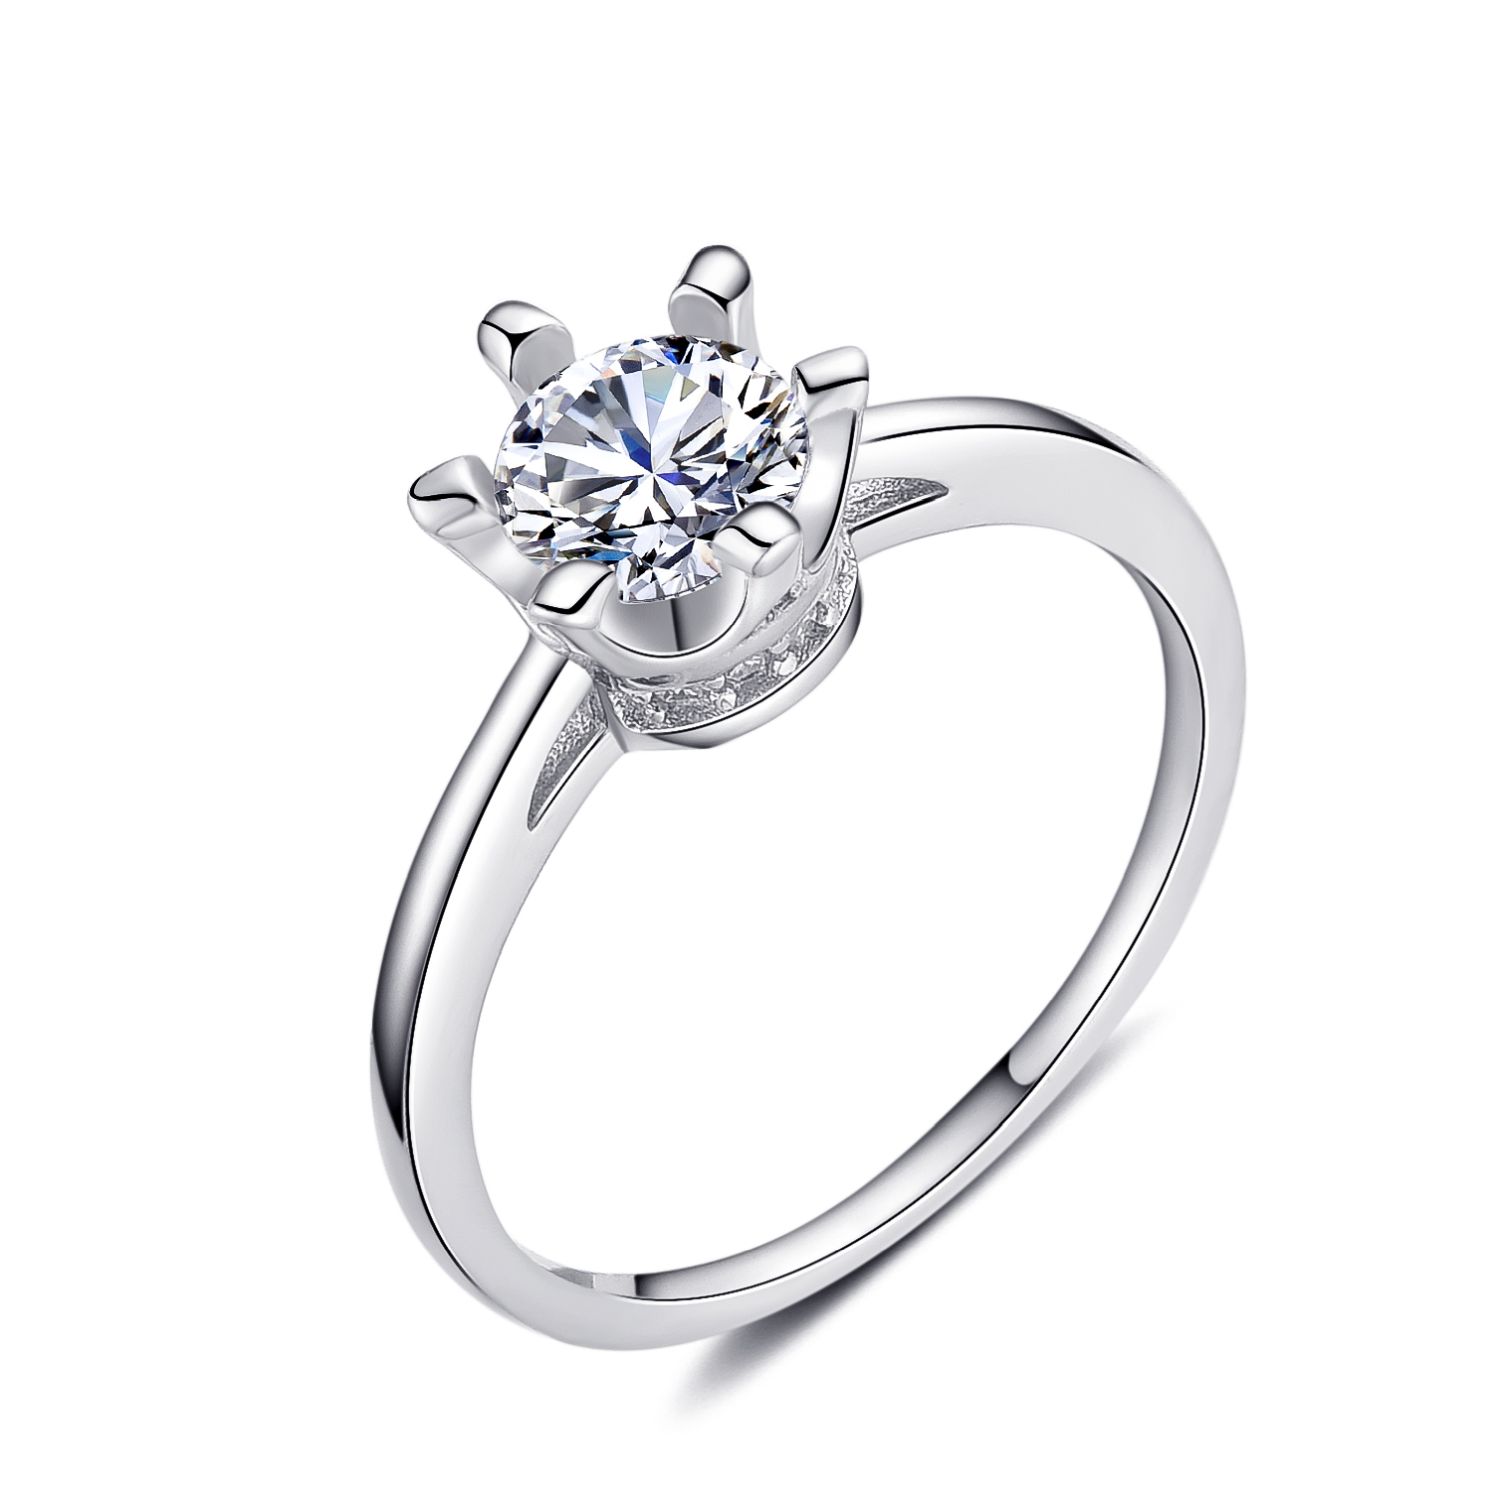 MOISS Moiss stříbrný prsten KORUNKA R0000546 Velikost 51 mm R0000547